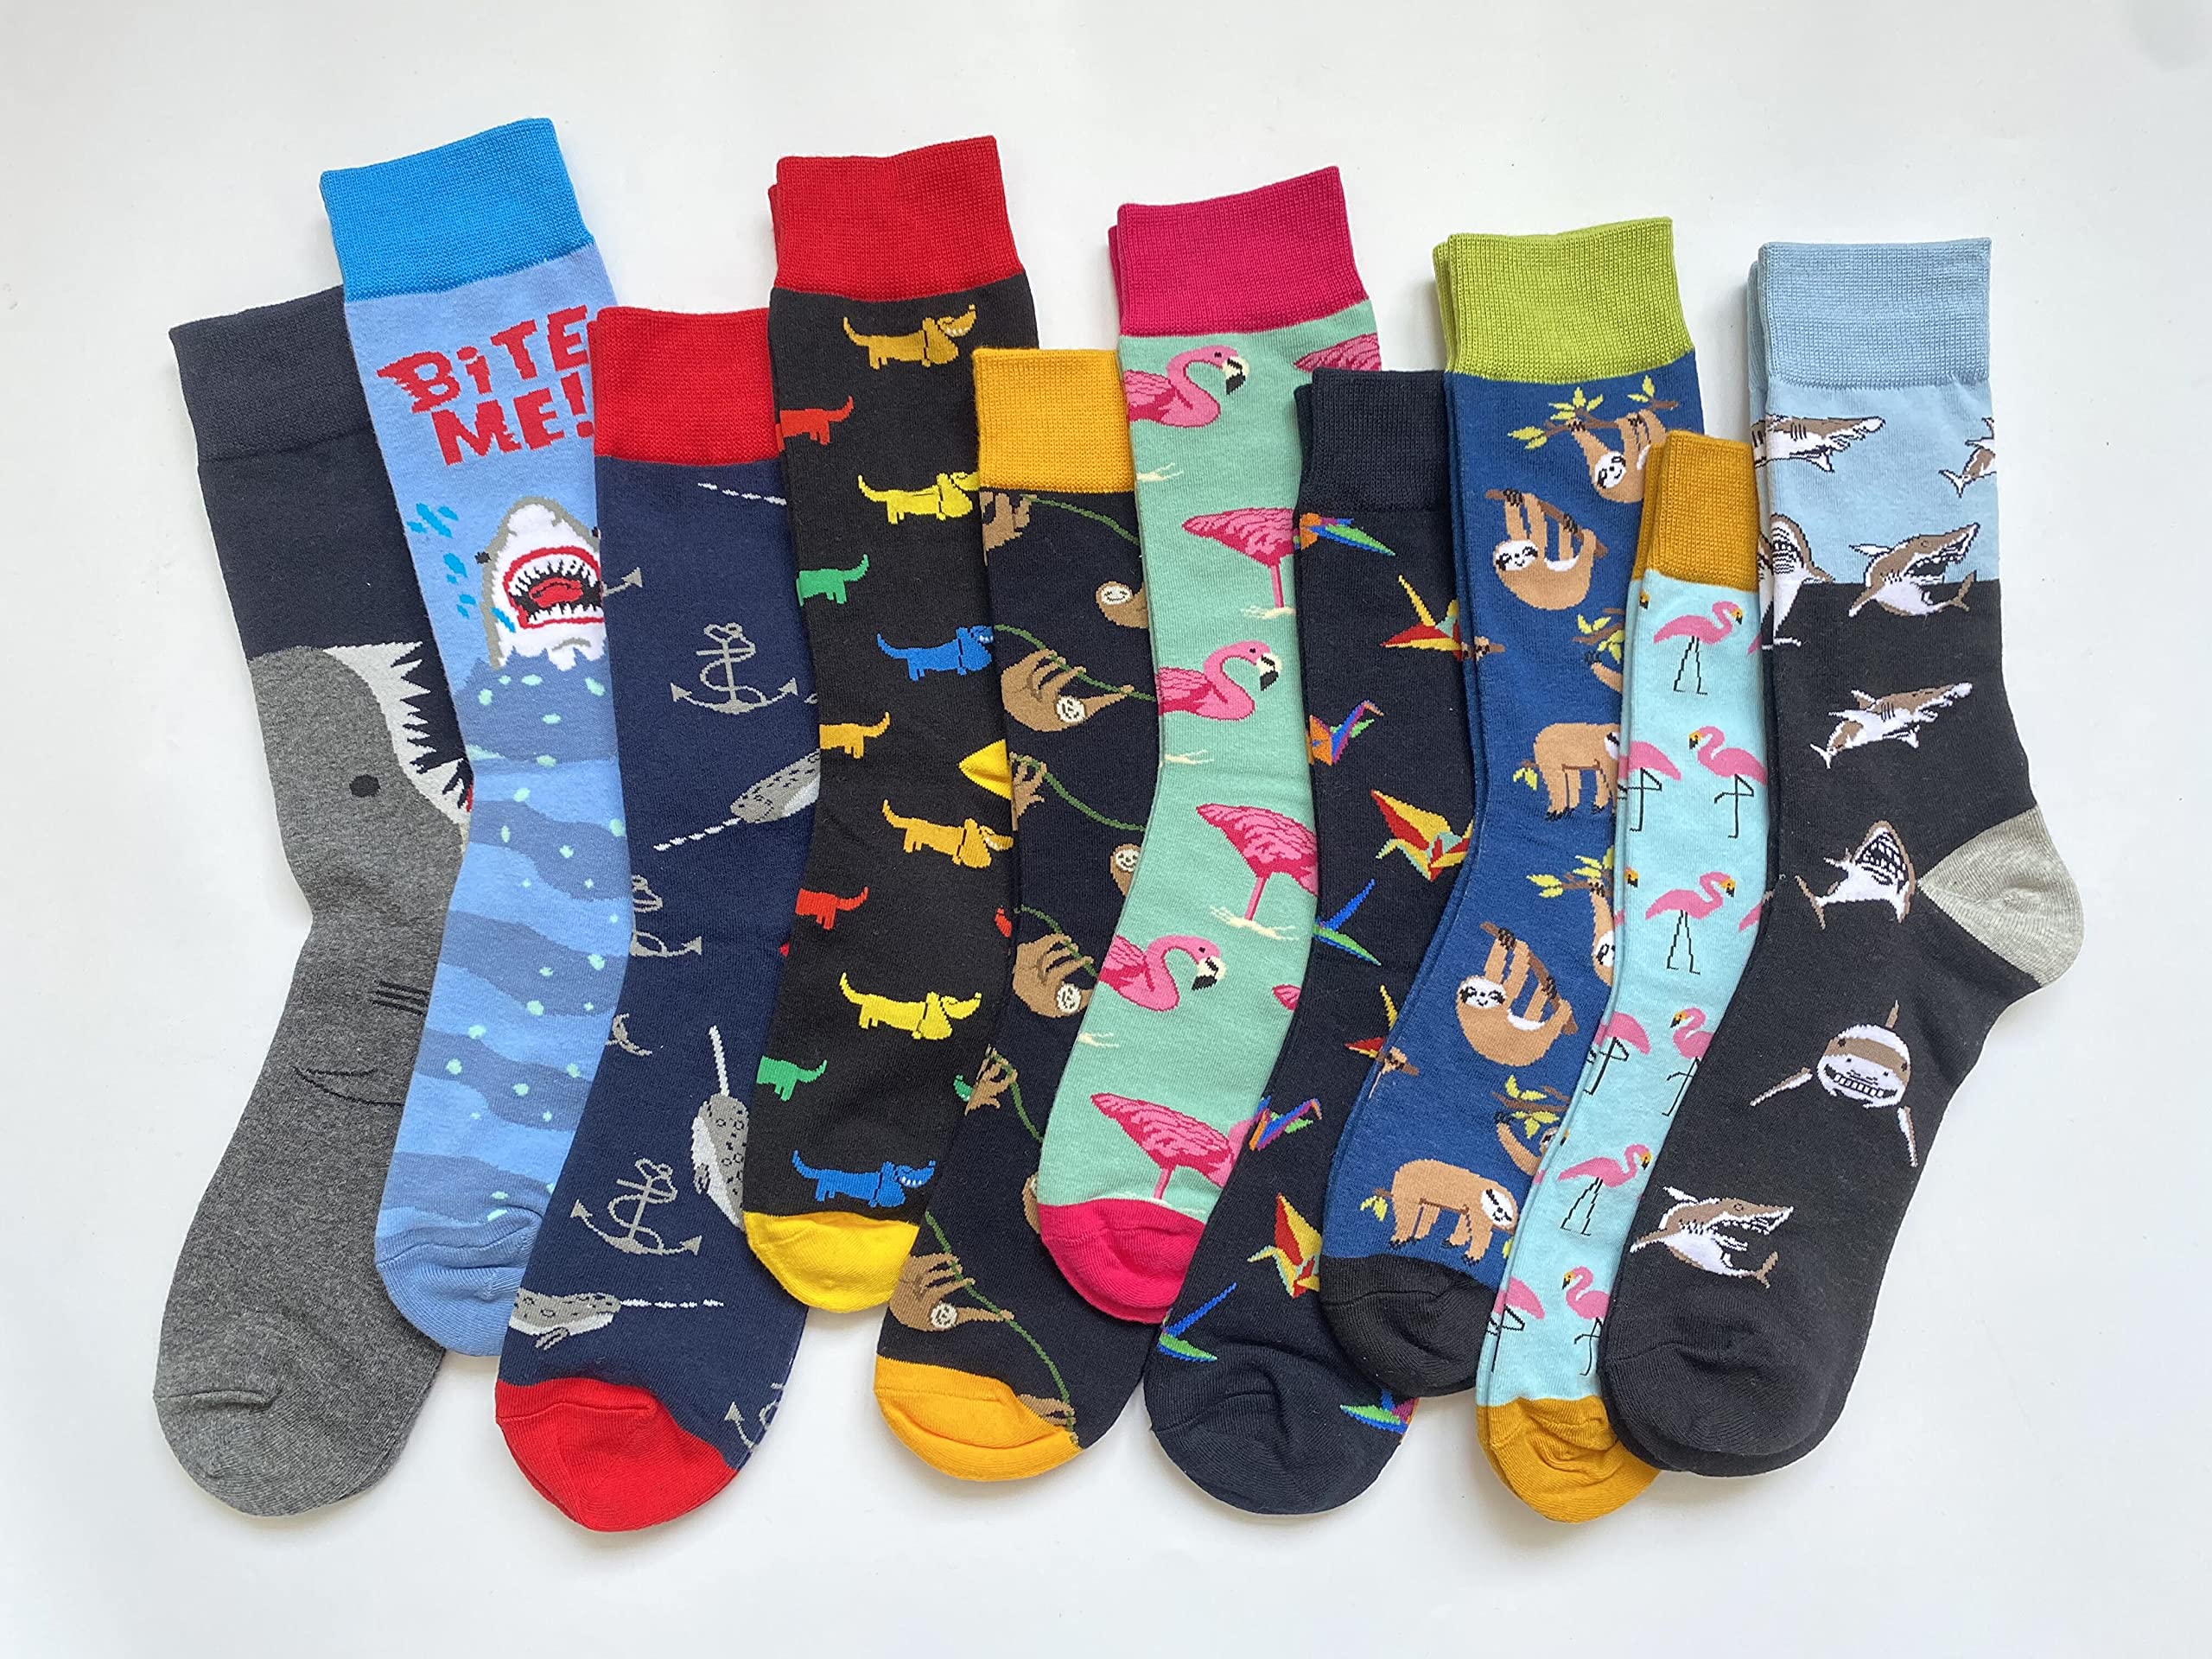 Men's Fun Set Dress Socks-Colorful Funny Novelty Cotton Funky Crew Socks Pack,Art Socks